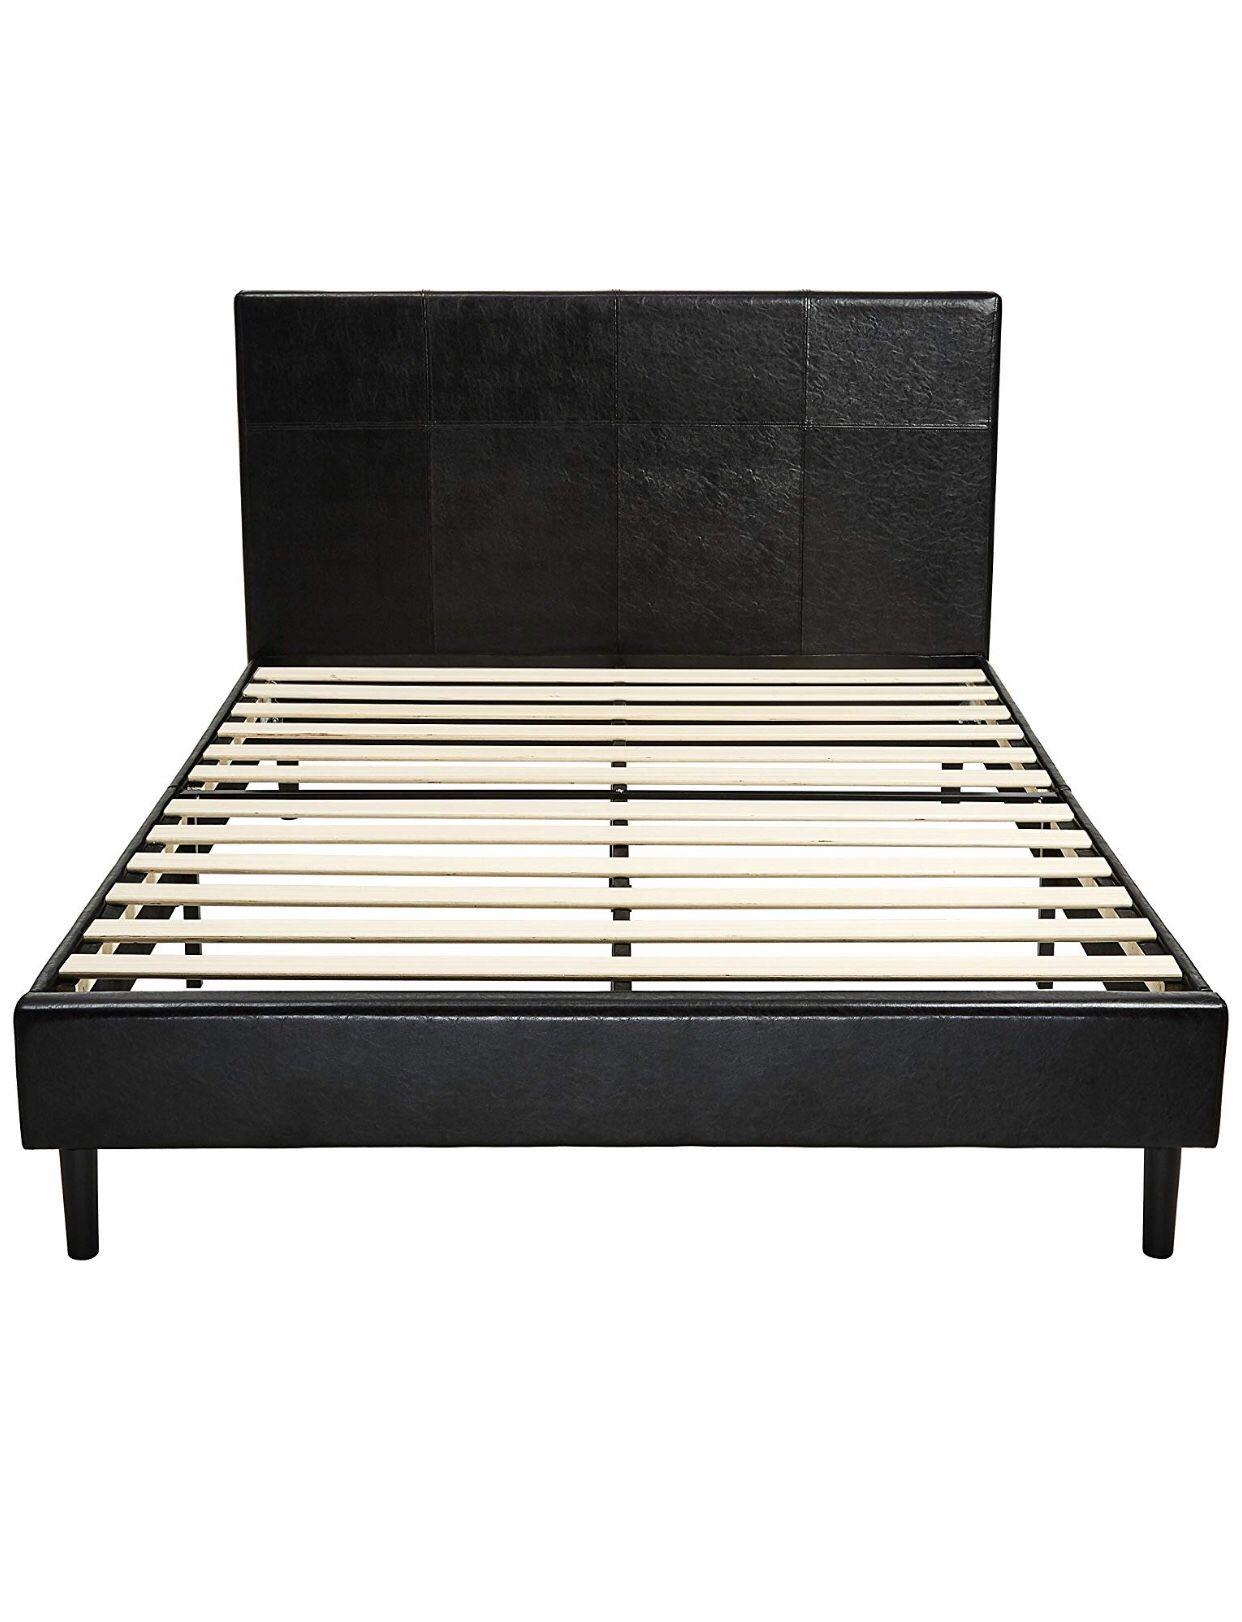 New QUEEN size platform bed frame